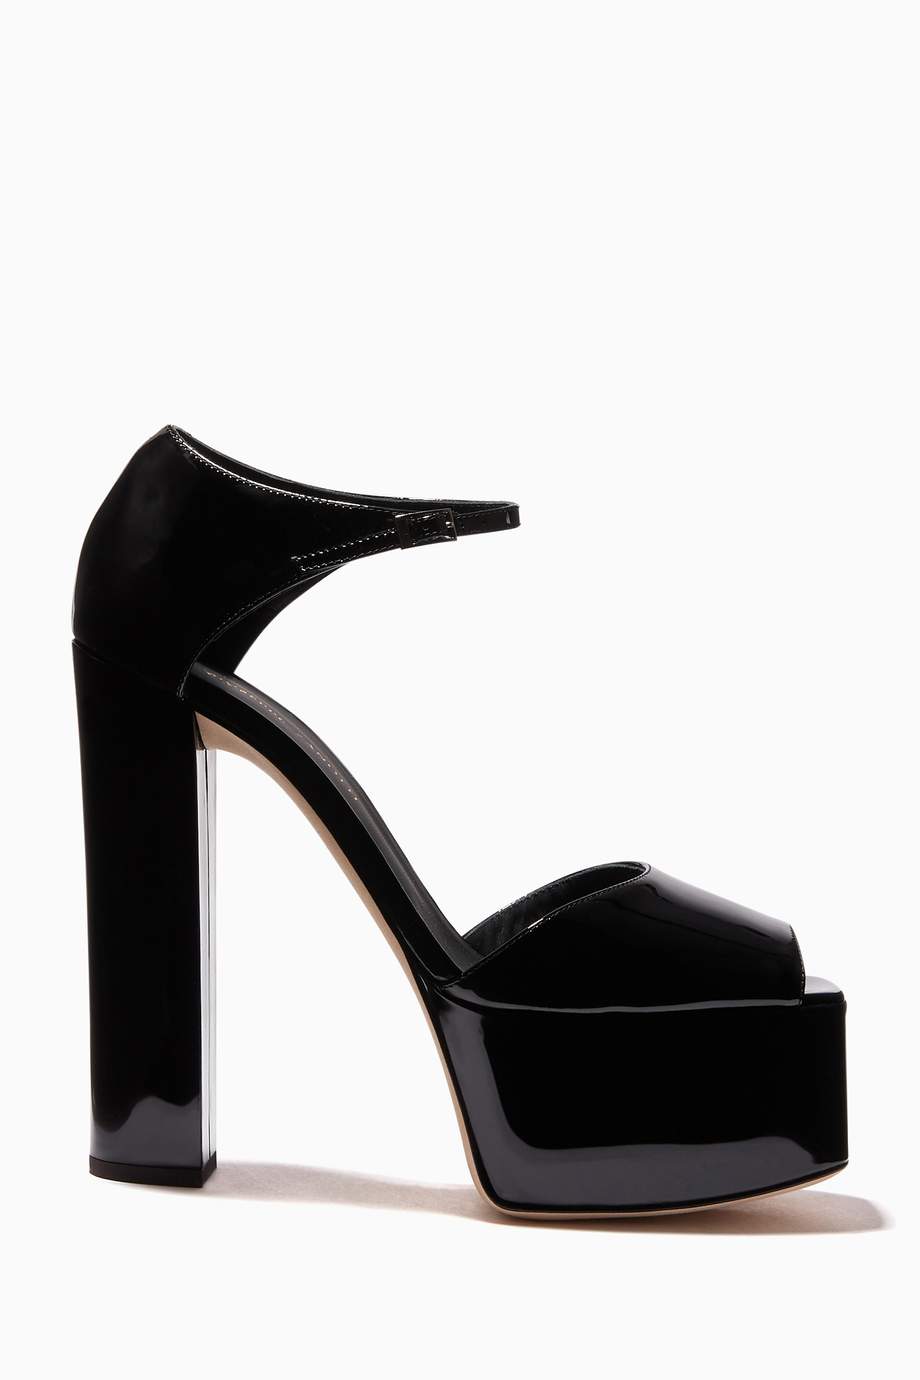 Shop Giuseppe Zanotti Black Bebe Leather Platform Sandals for Women ...